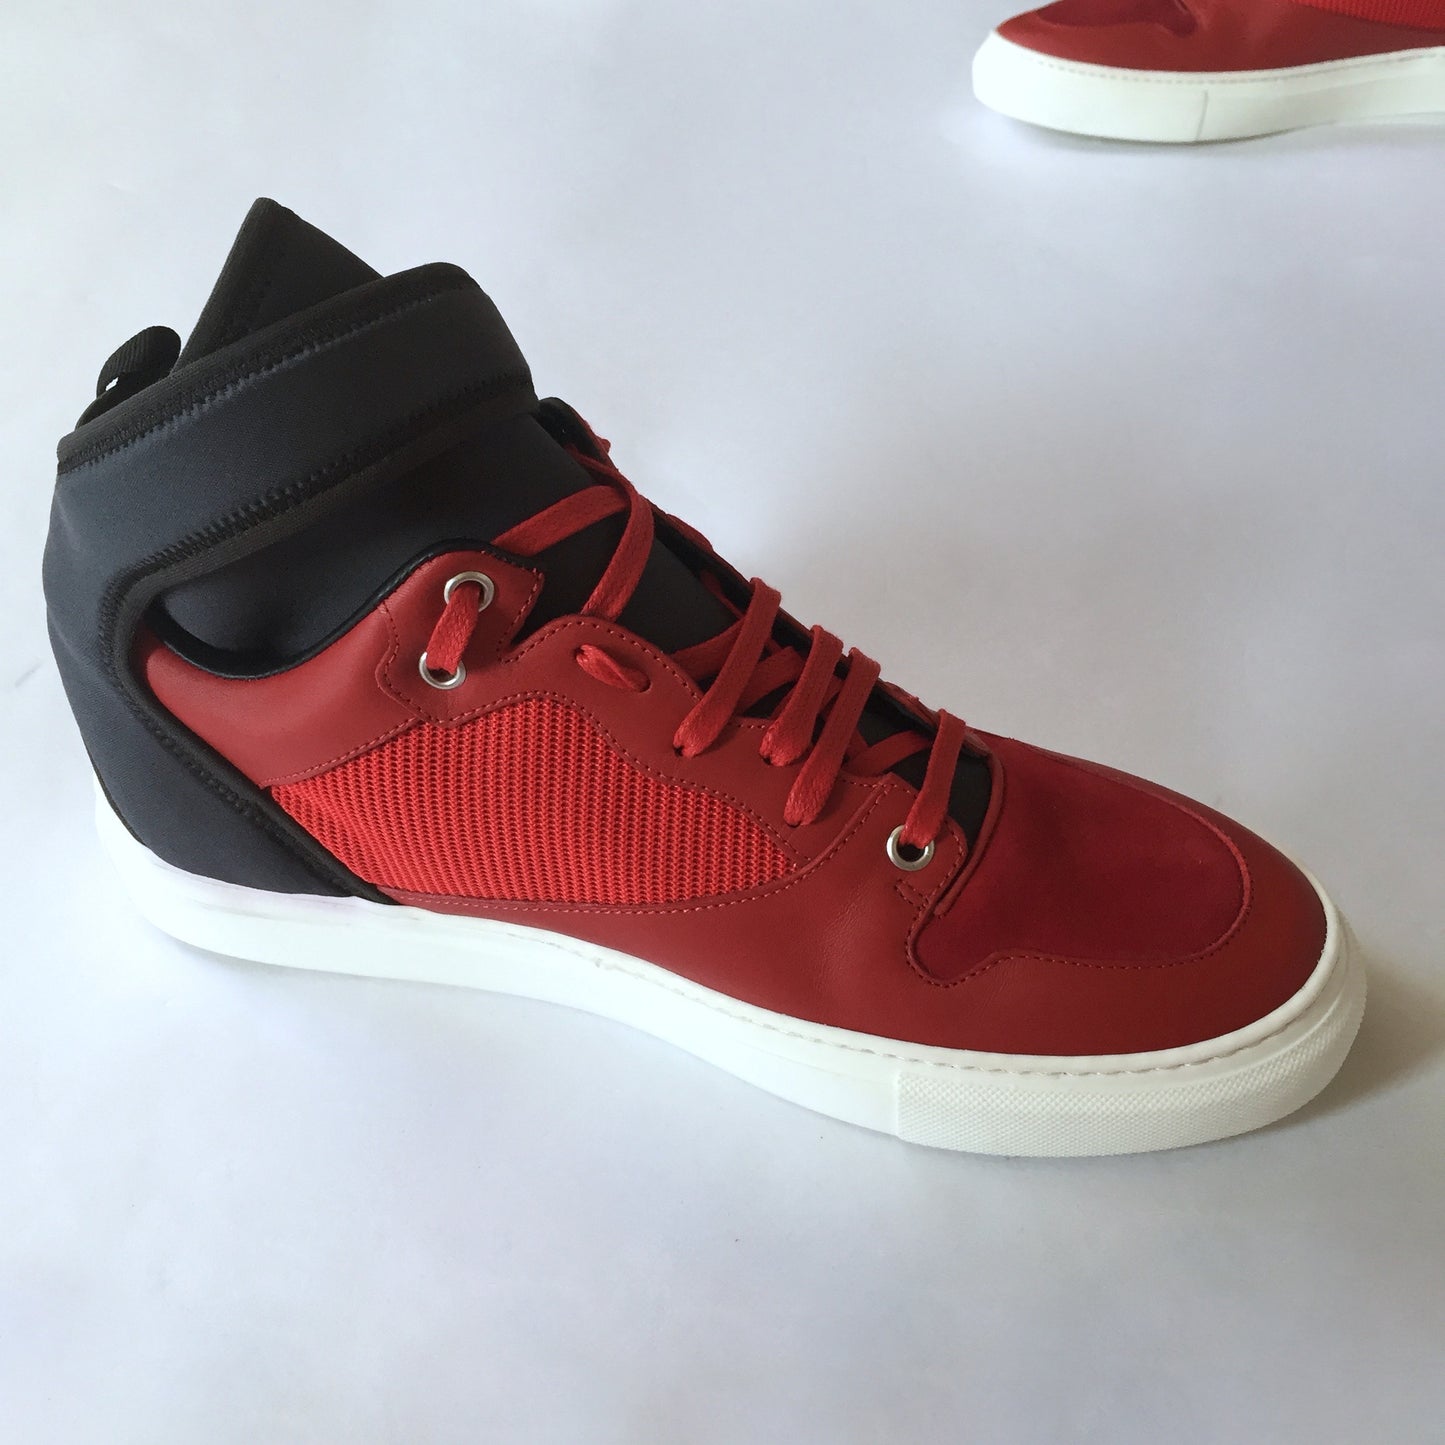 Balenciaga - Leather & Neoprene Mid Top Sneakers